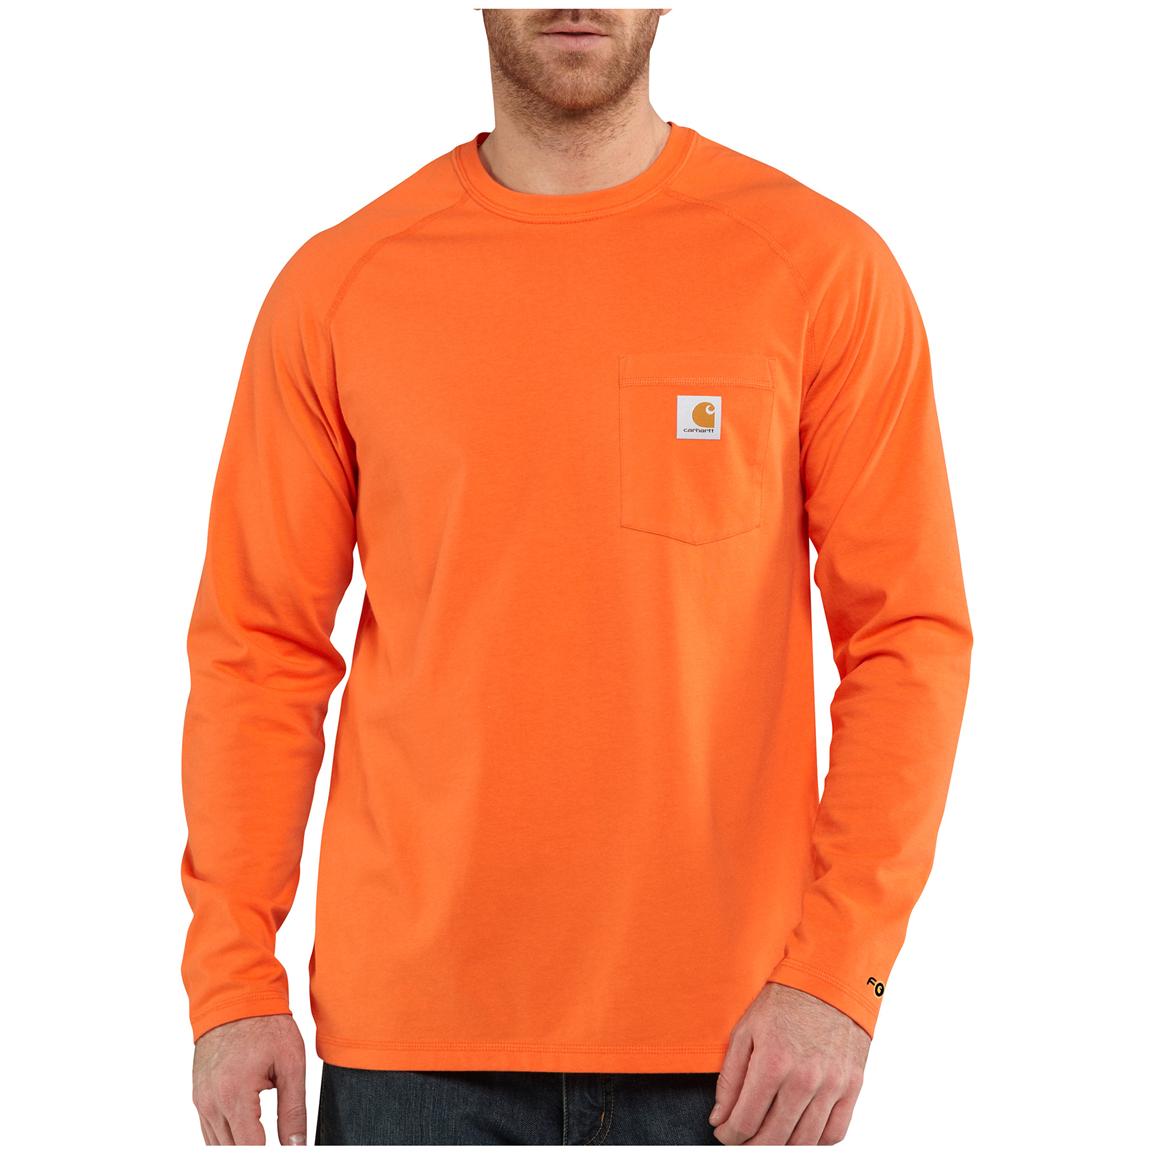 Carhartt Force Cotton Long-sleeved T-shirt - 590862, T-Shirts at ...